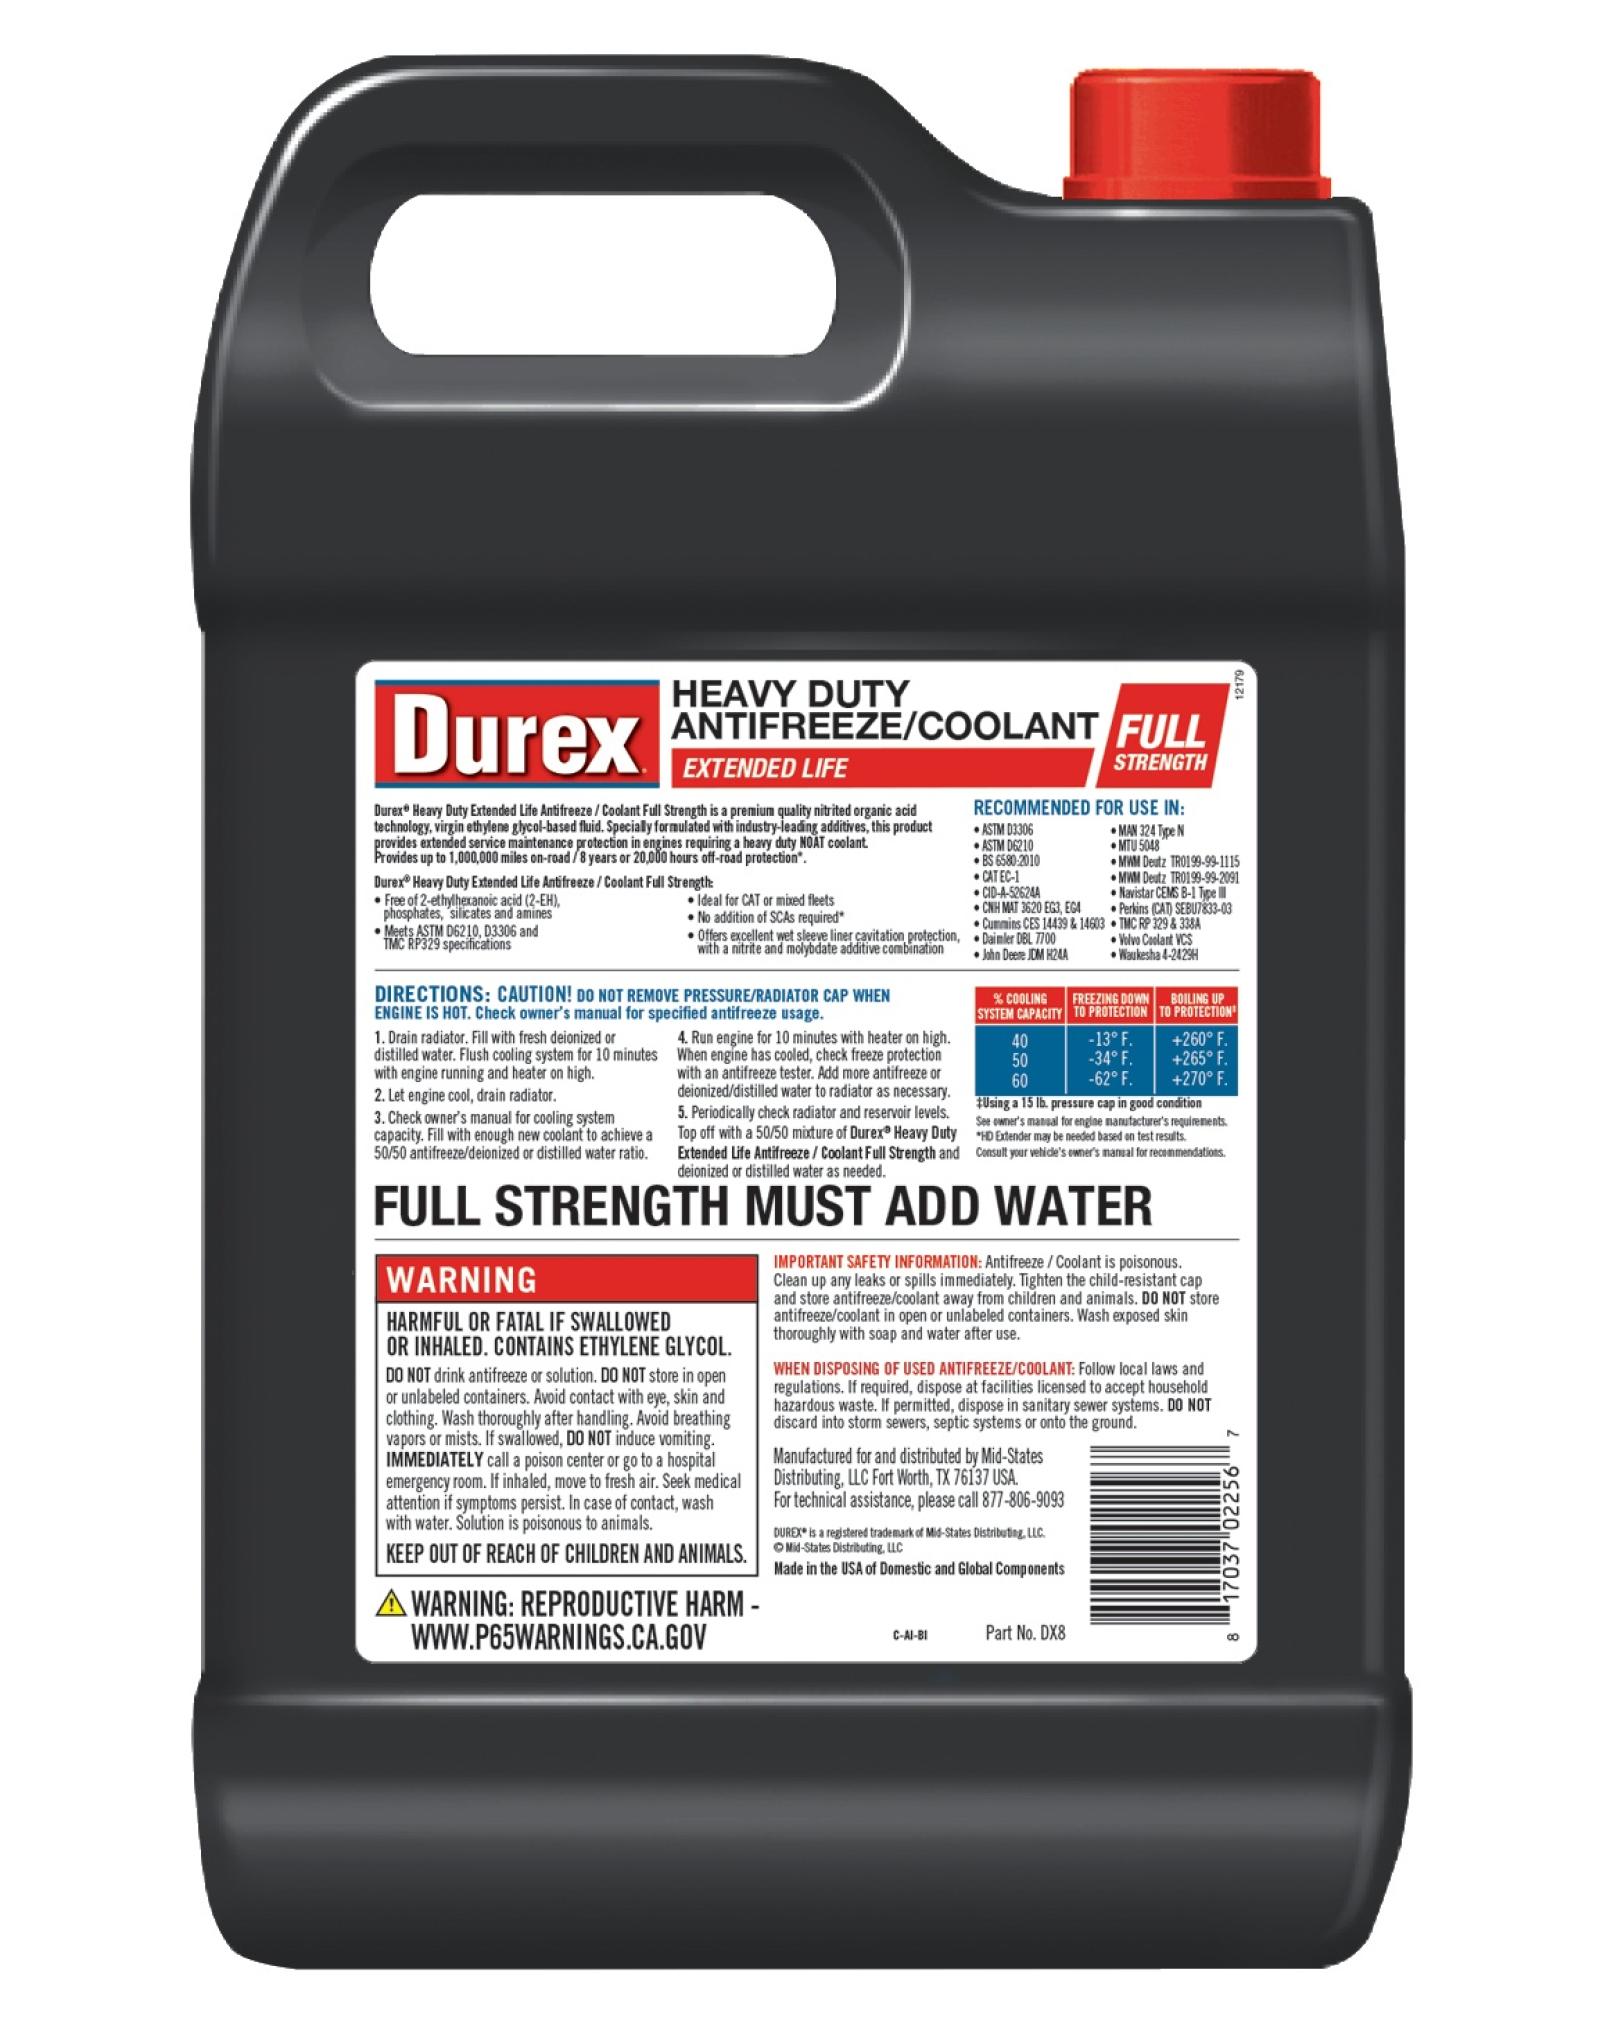 Durex® Heavy Duty Extended Life Formula Antifreeze/Coolant